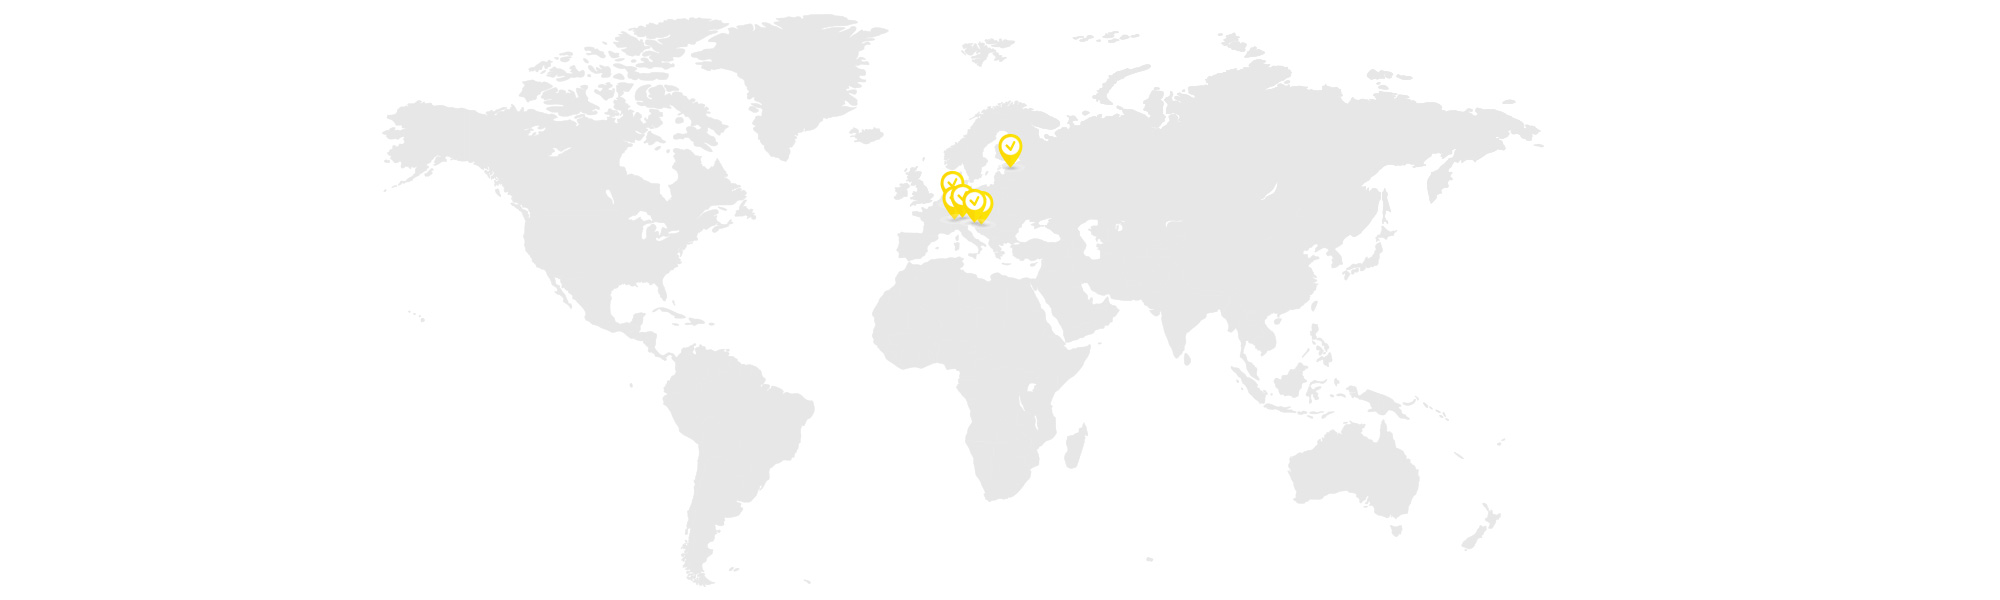 Totter Midi Partner auf Weltkarte